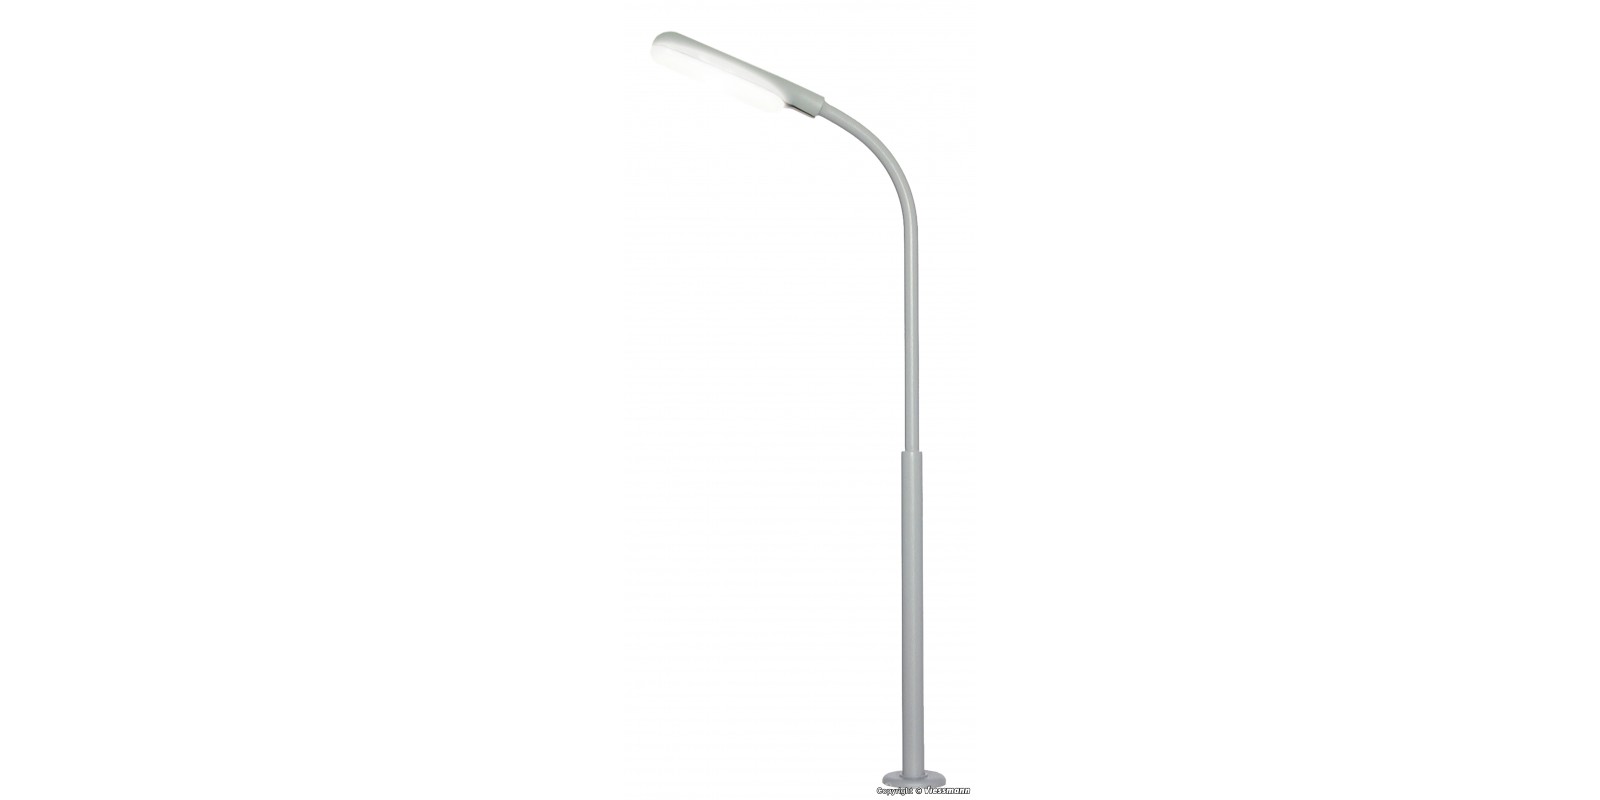 Vi6090 H0 Whip lamp with LED white